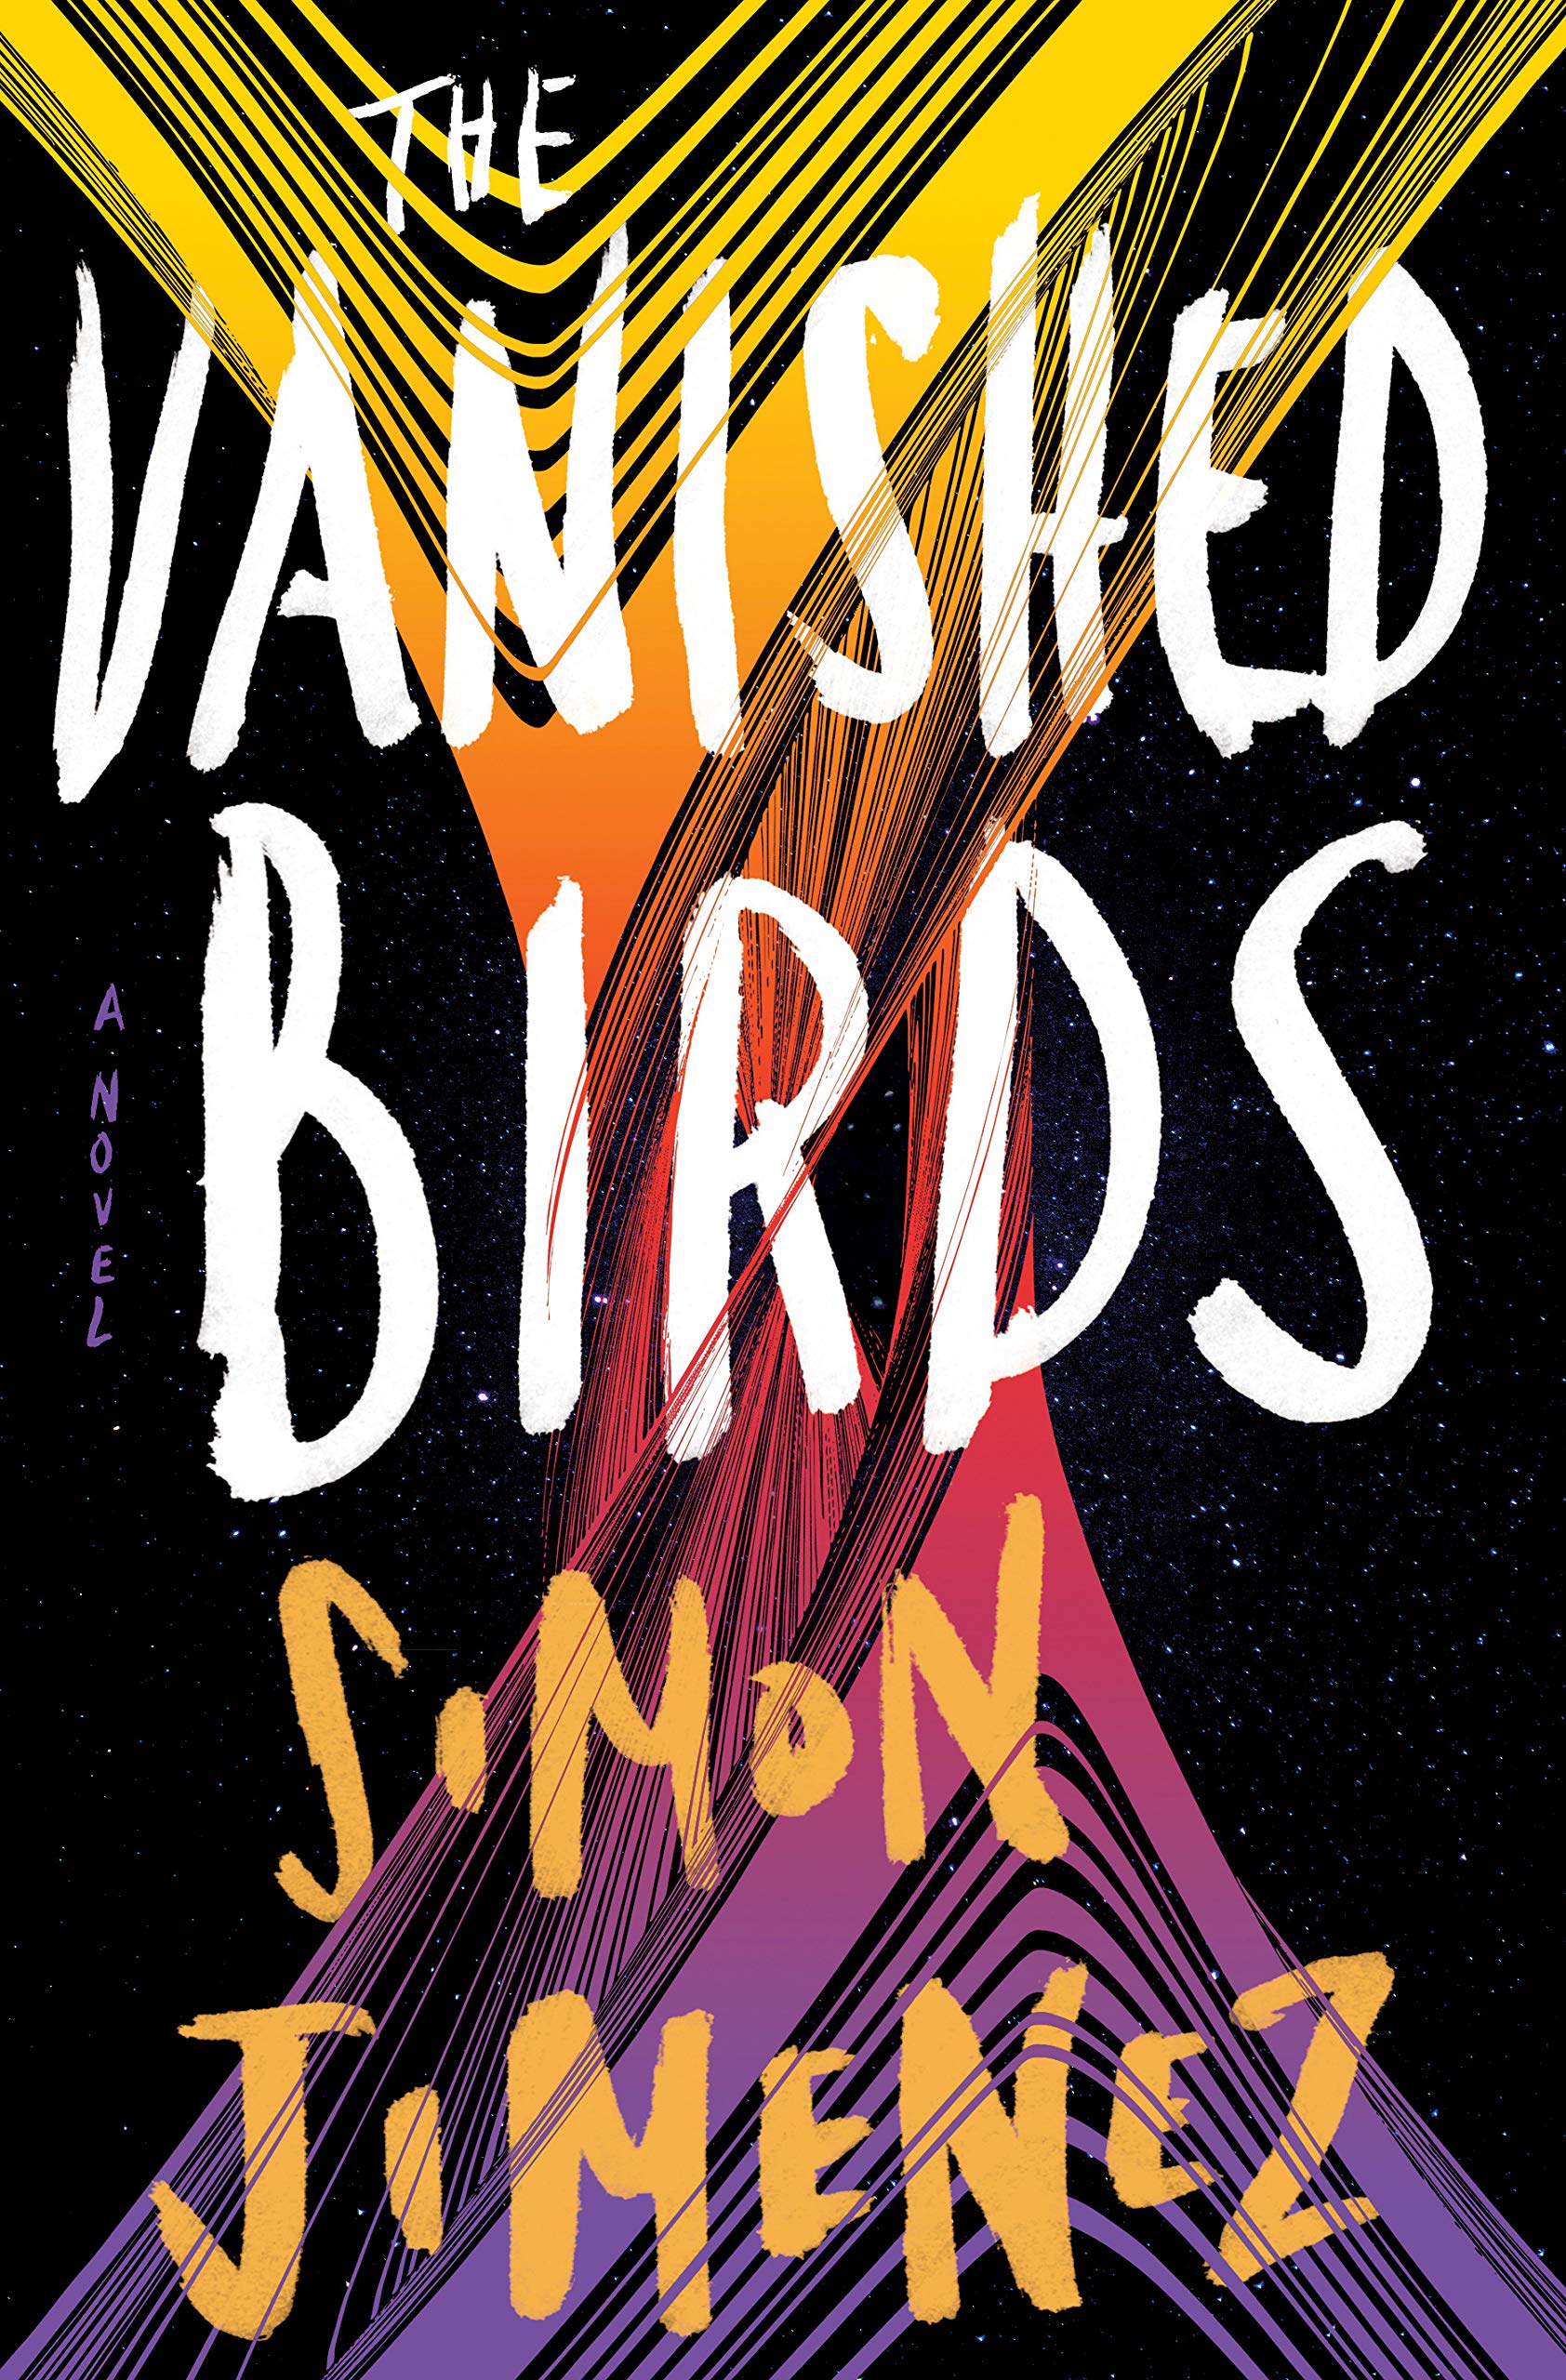 The Vanished Birds 2020 book releases